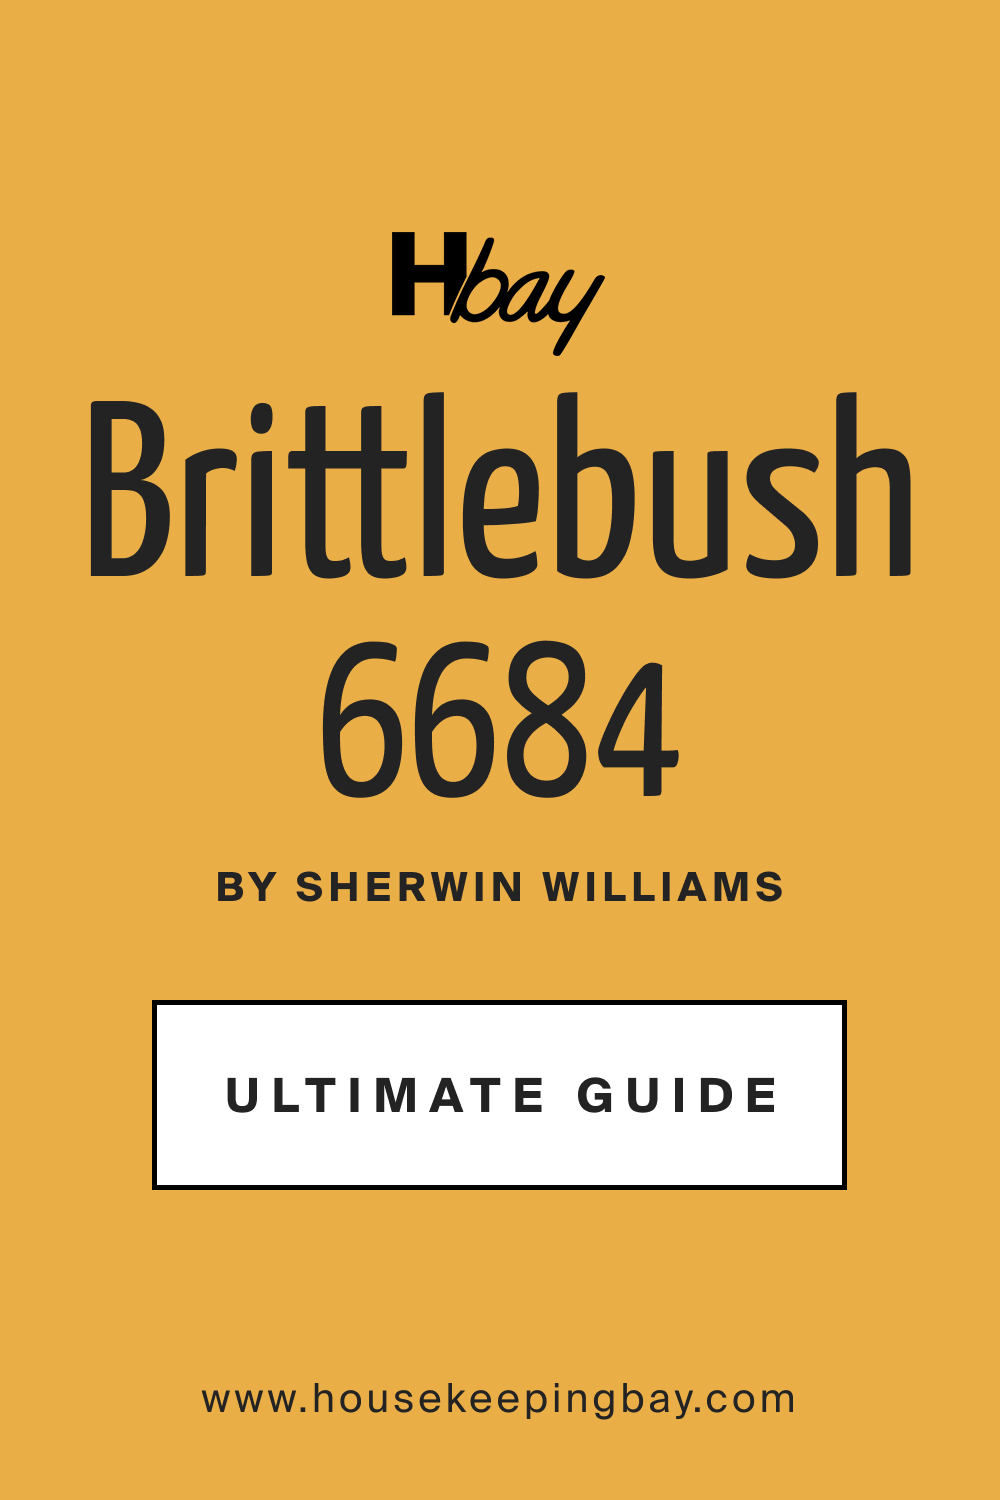 Brittlebush SW 6684 by Sherwin Williams Ultimate Guide